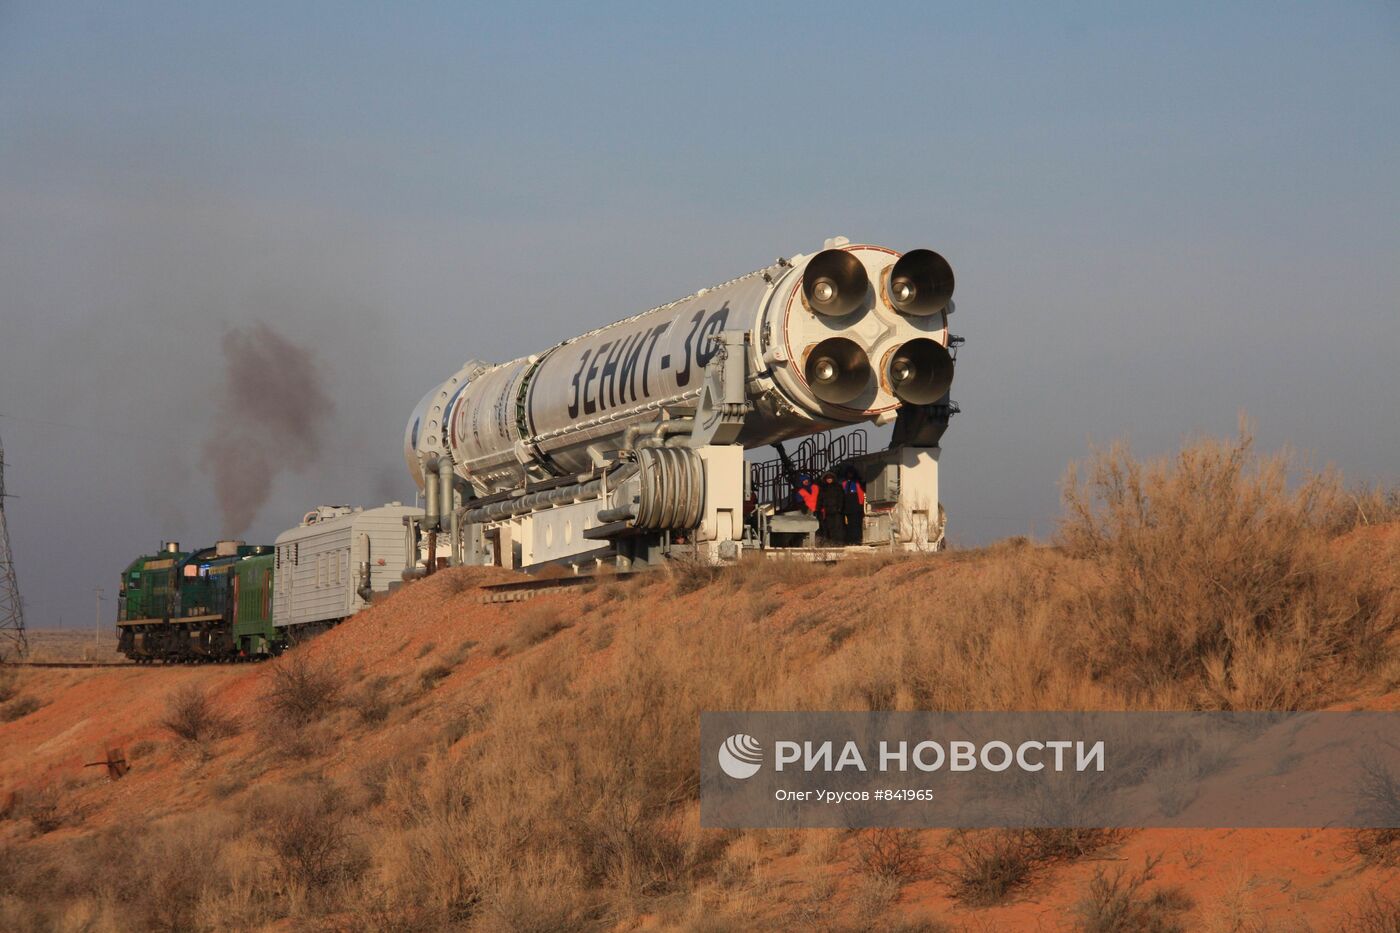 Установка ракеты-носителя "Зенит-2SБ" на космодроме "Байконур"